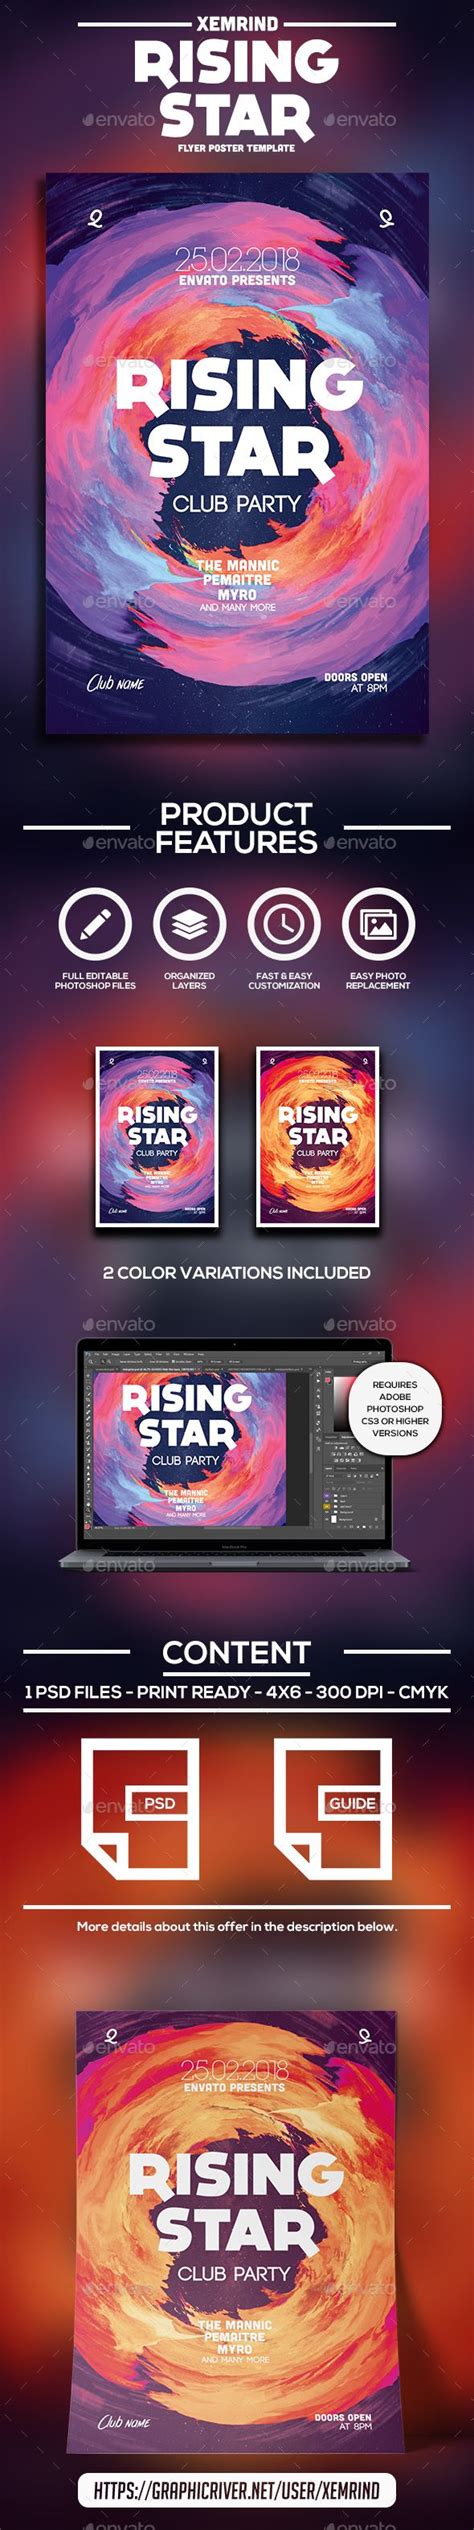 Rising Star 2 Free Download Purpleandblackwallpaperforwalls